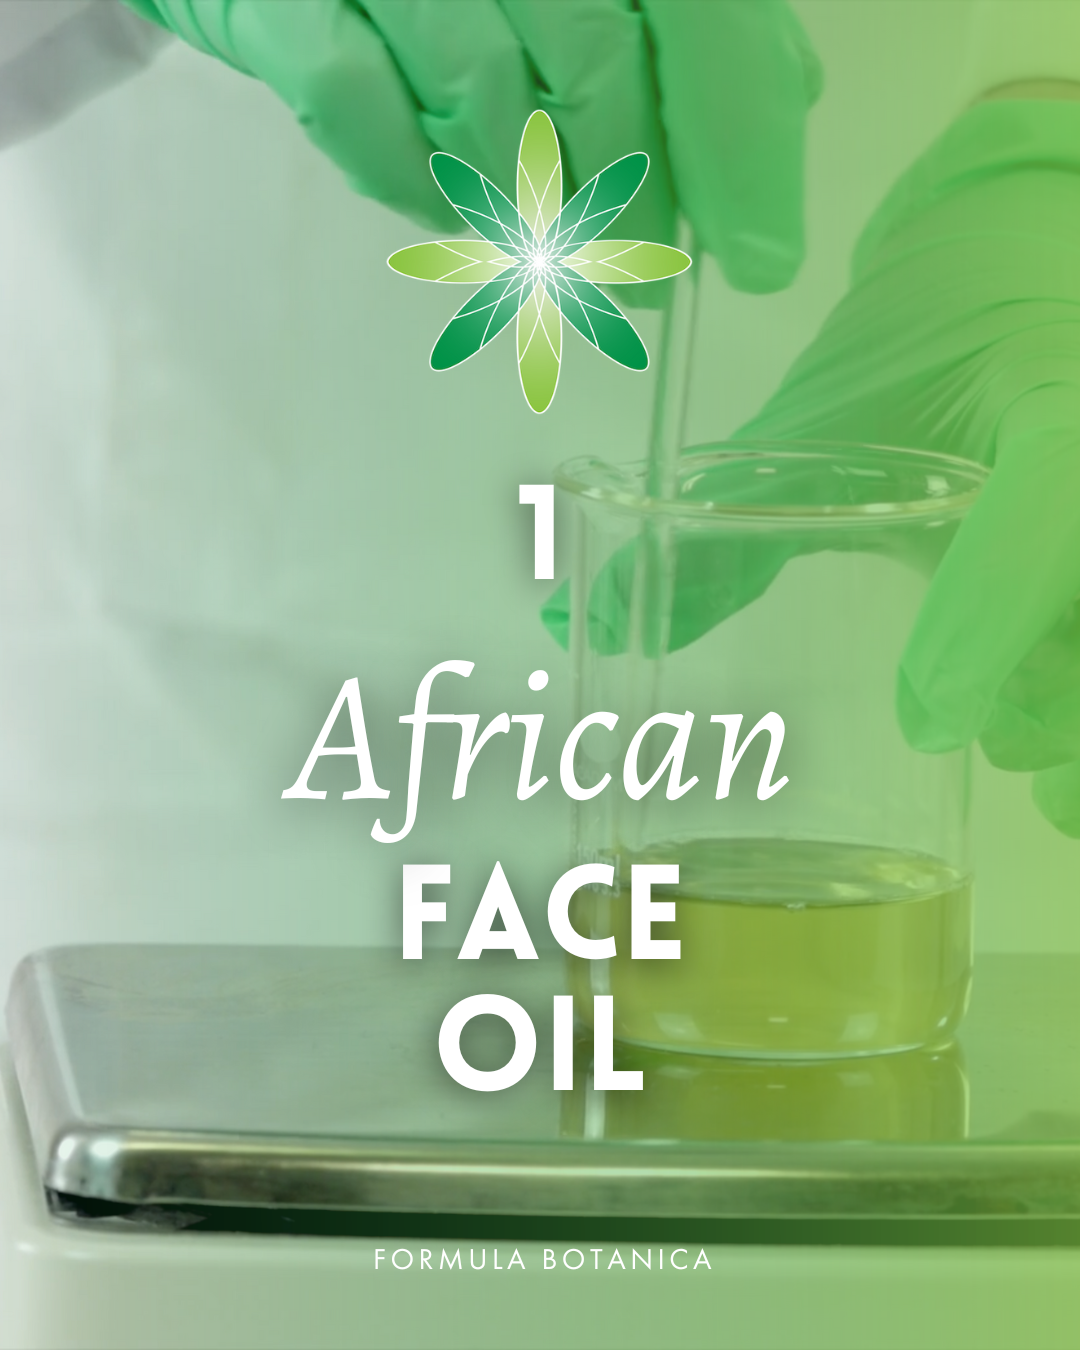 African Facial Oil